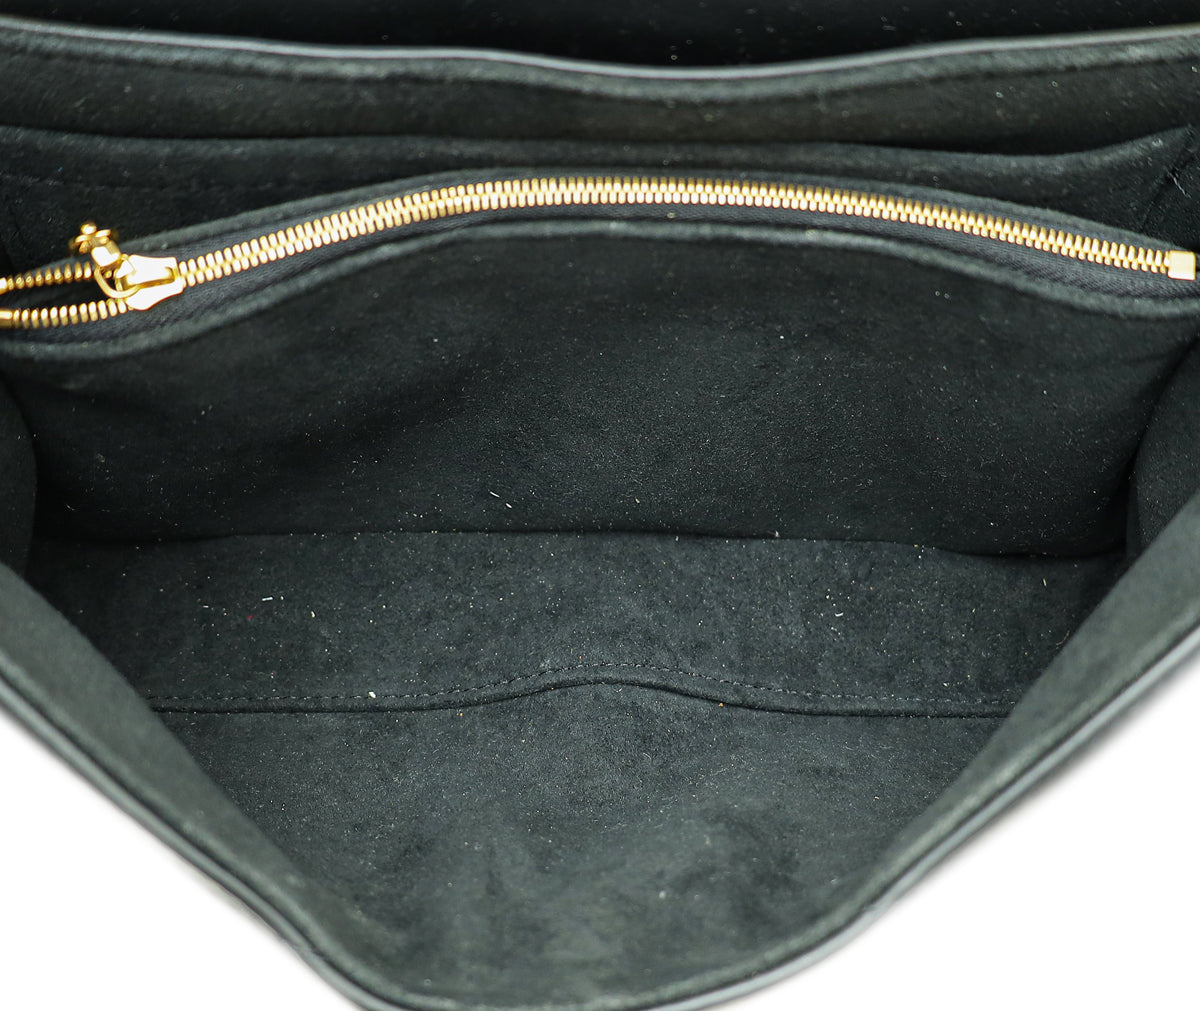 Louis Vuitton Black New Wave GM Chain Bag